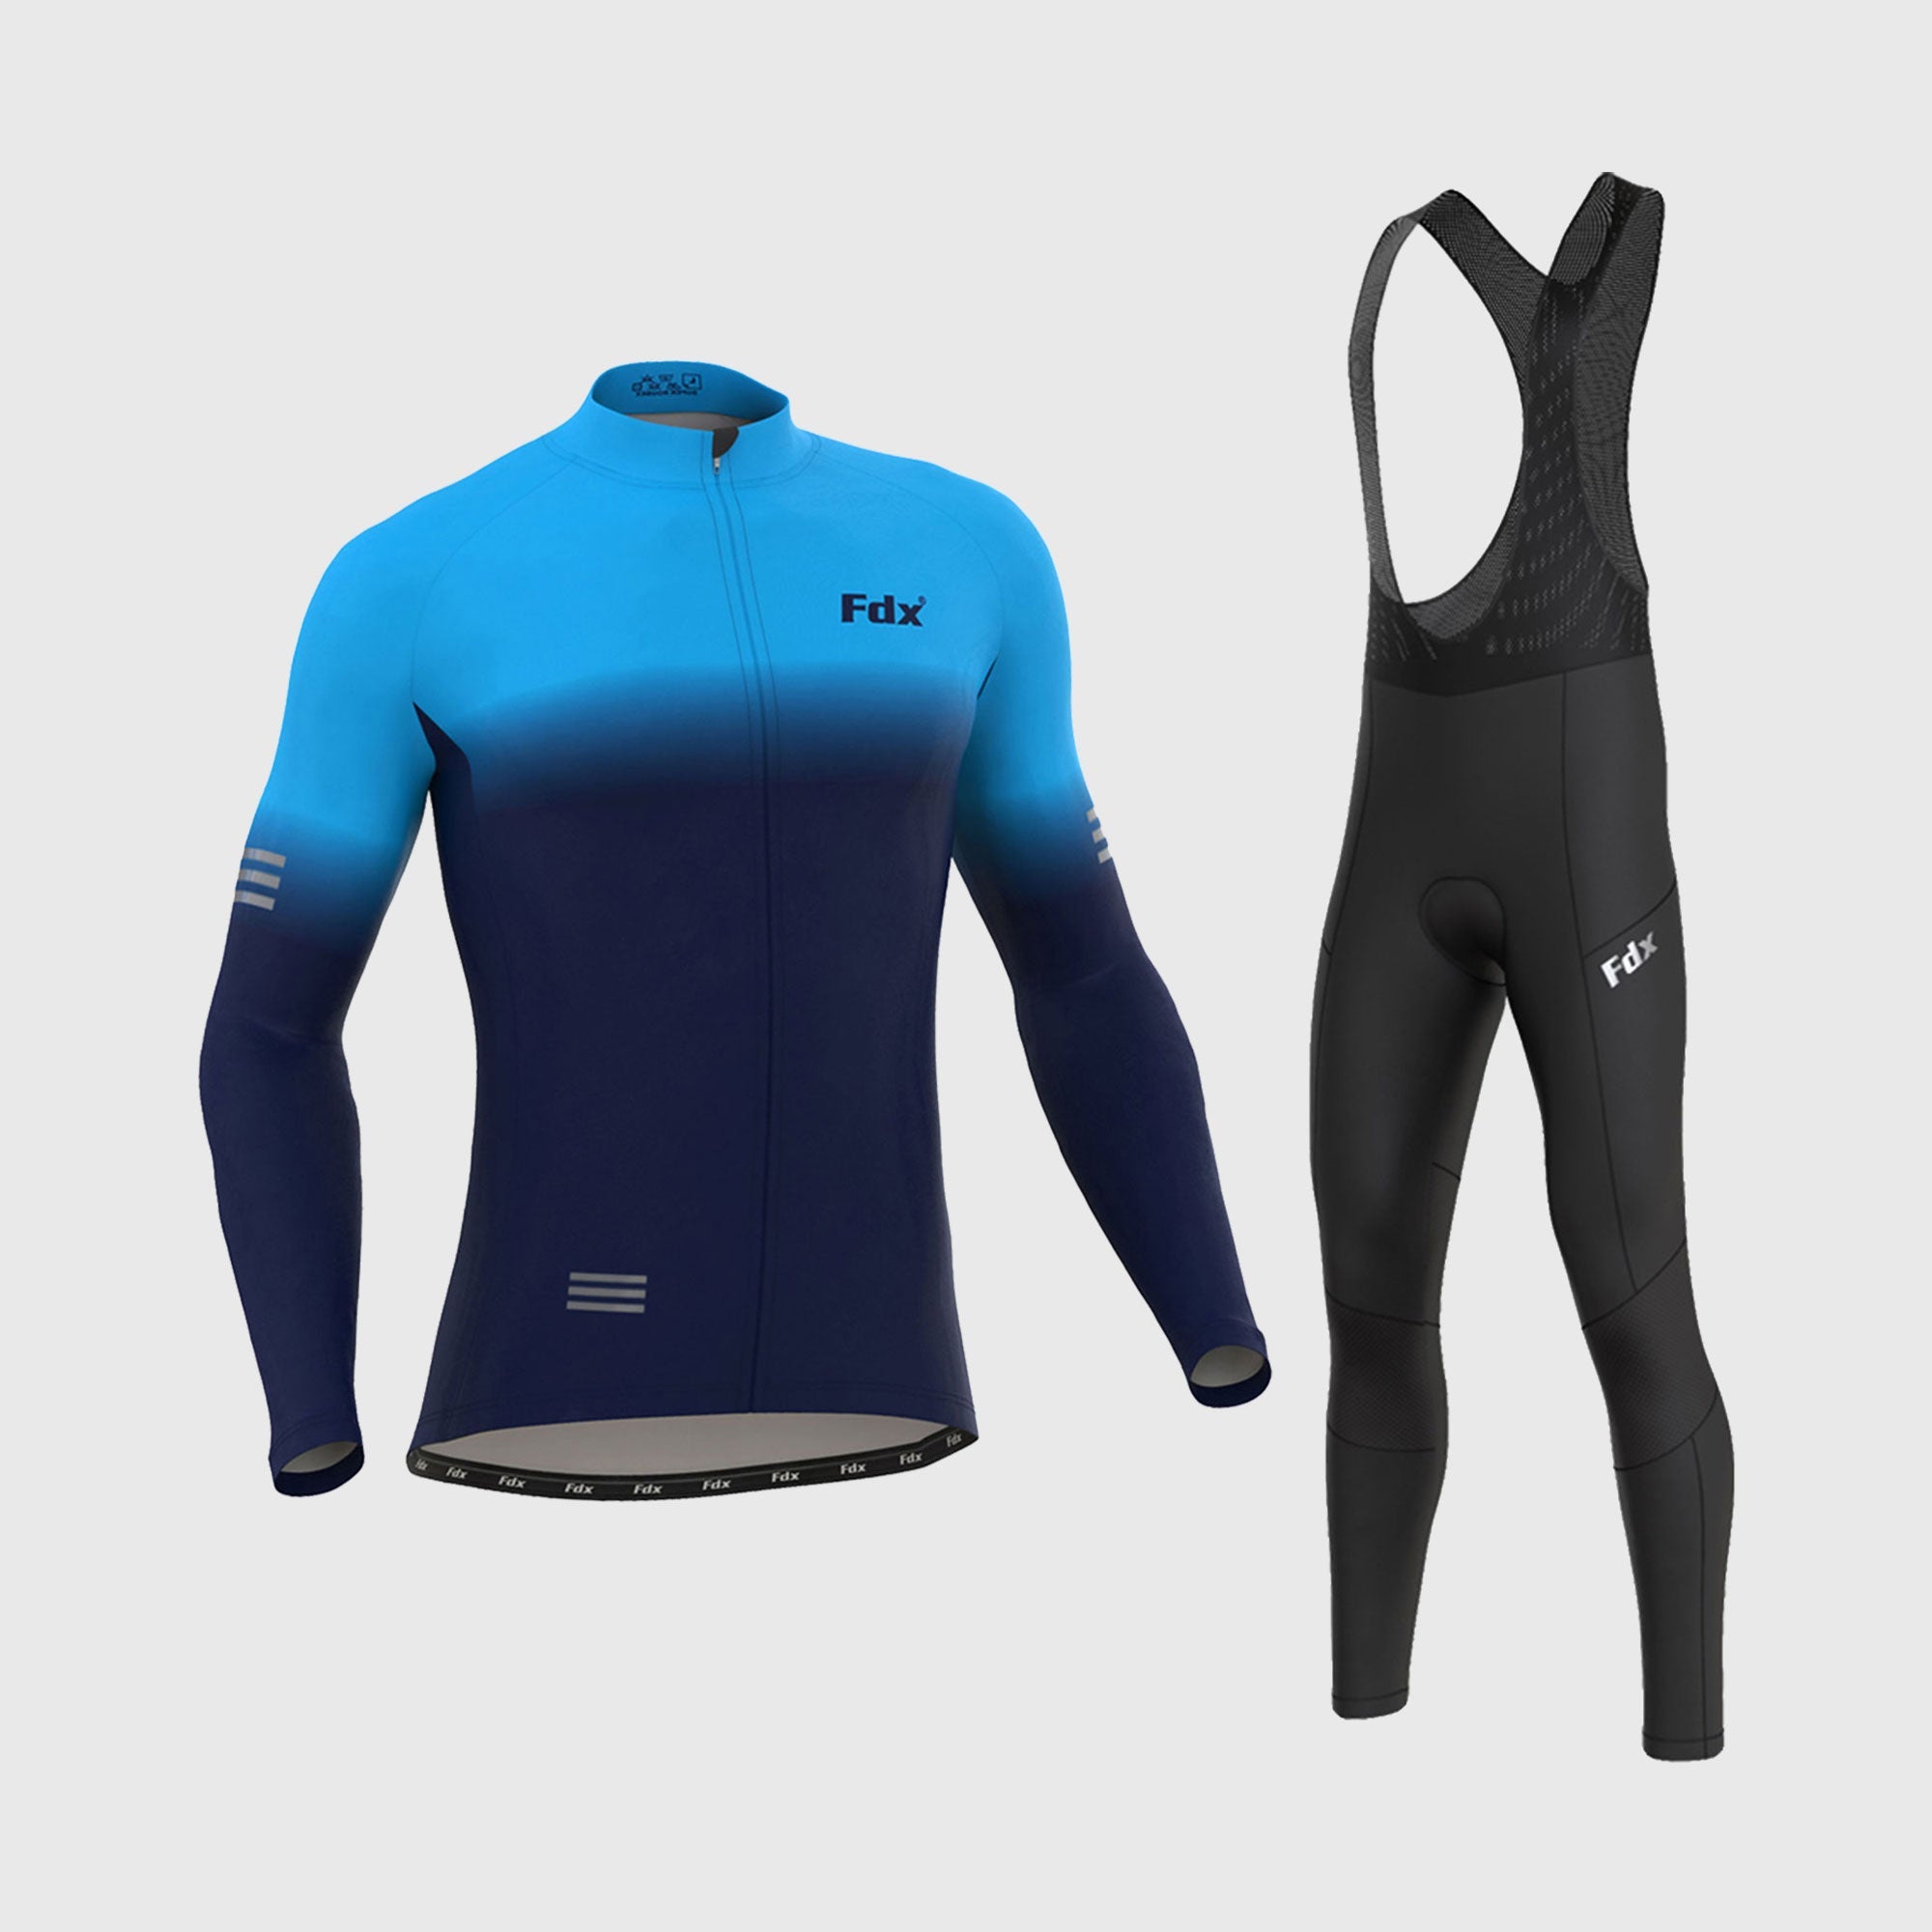 Fdx Men's Set Duo Thermal Roubaix Long Sleeve Cycling Jersey & Bib Tights - Blue / Navy Blue